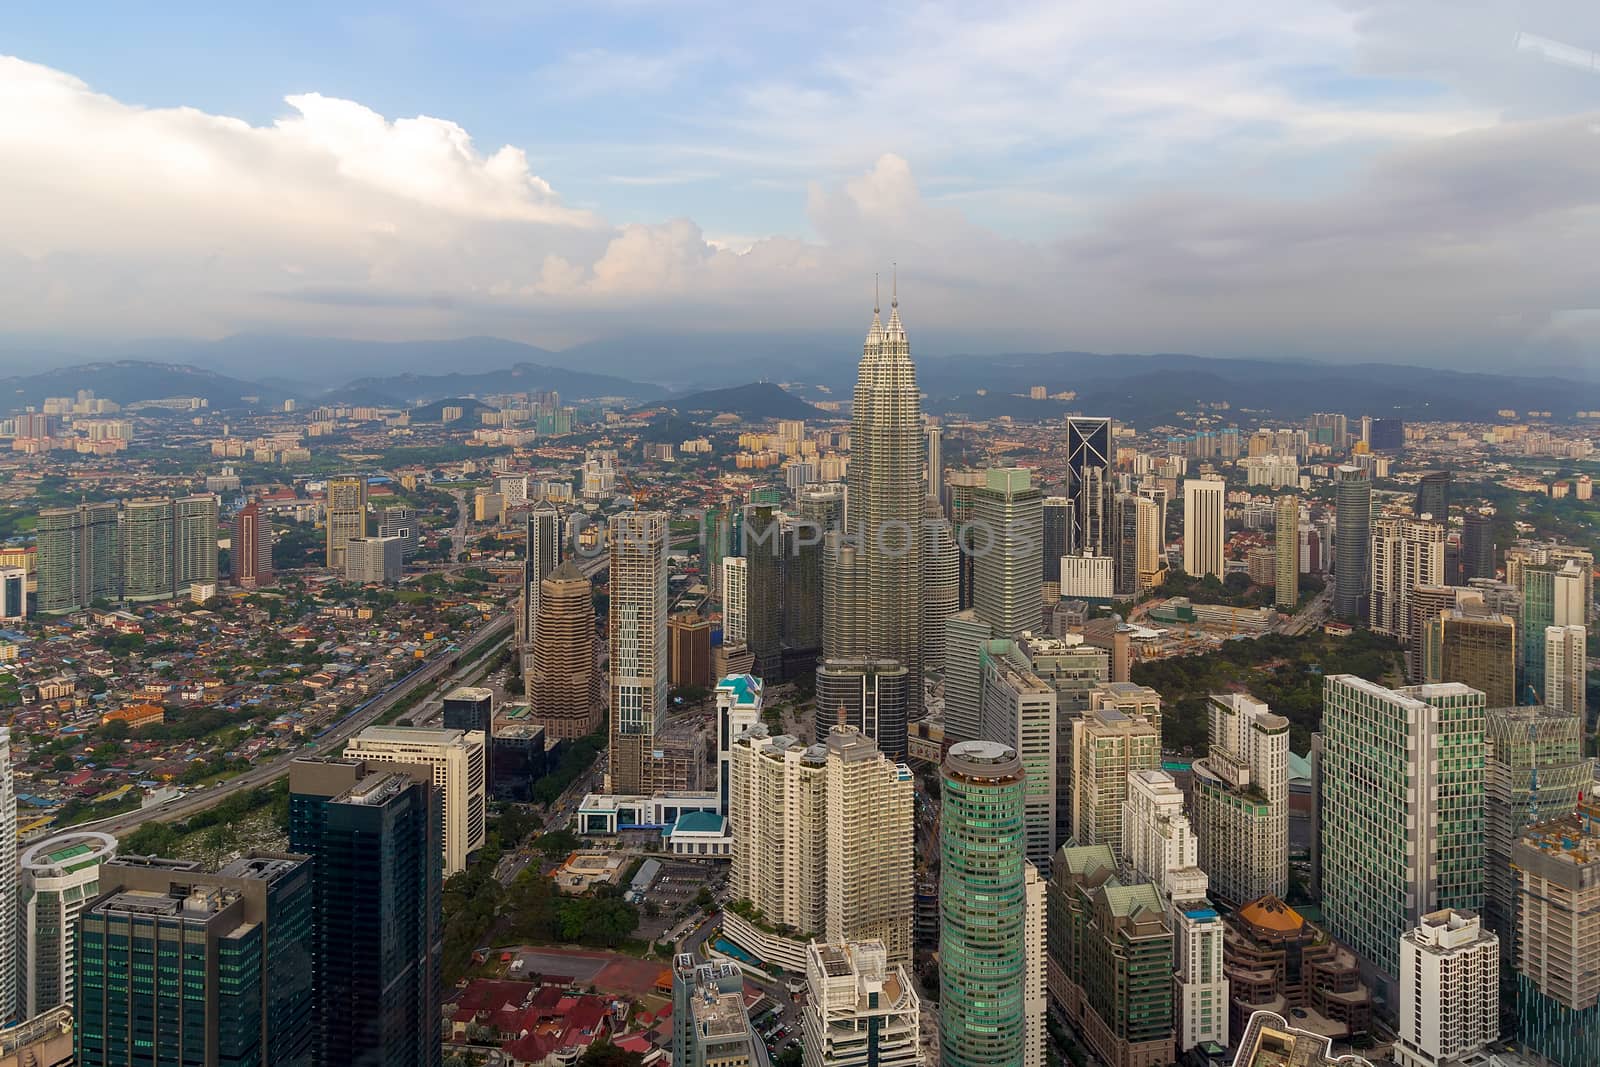 Kuala Lumpur Modern City Aerial View by jpldesigns